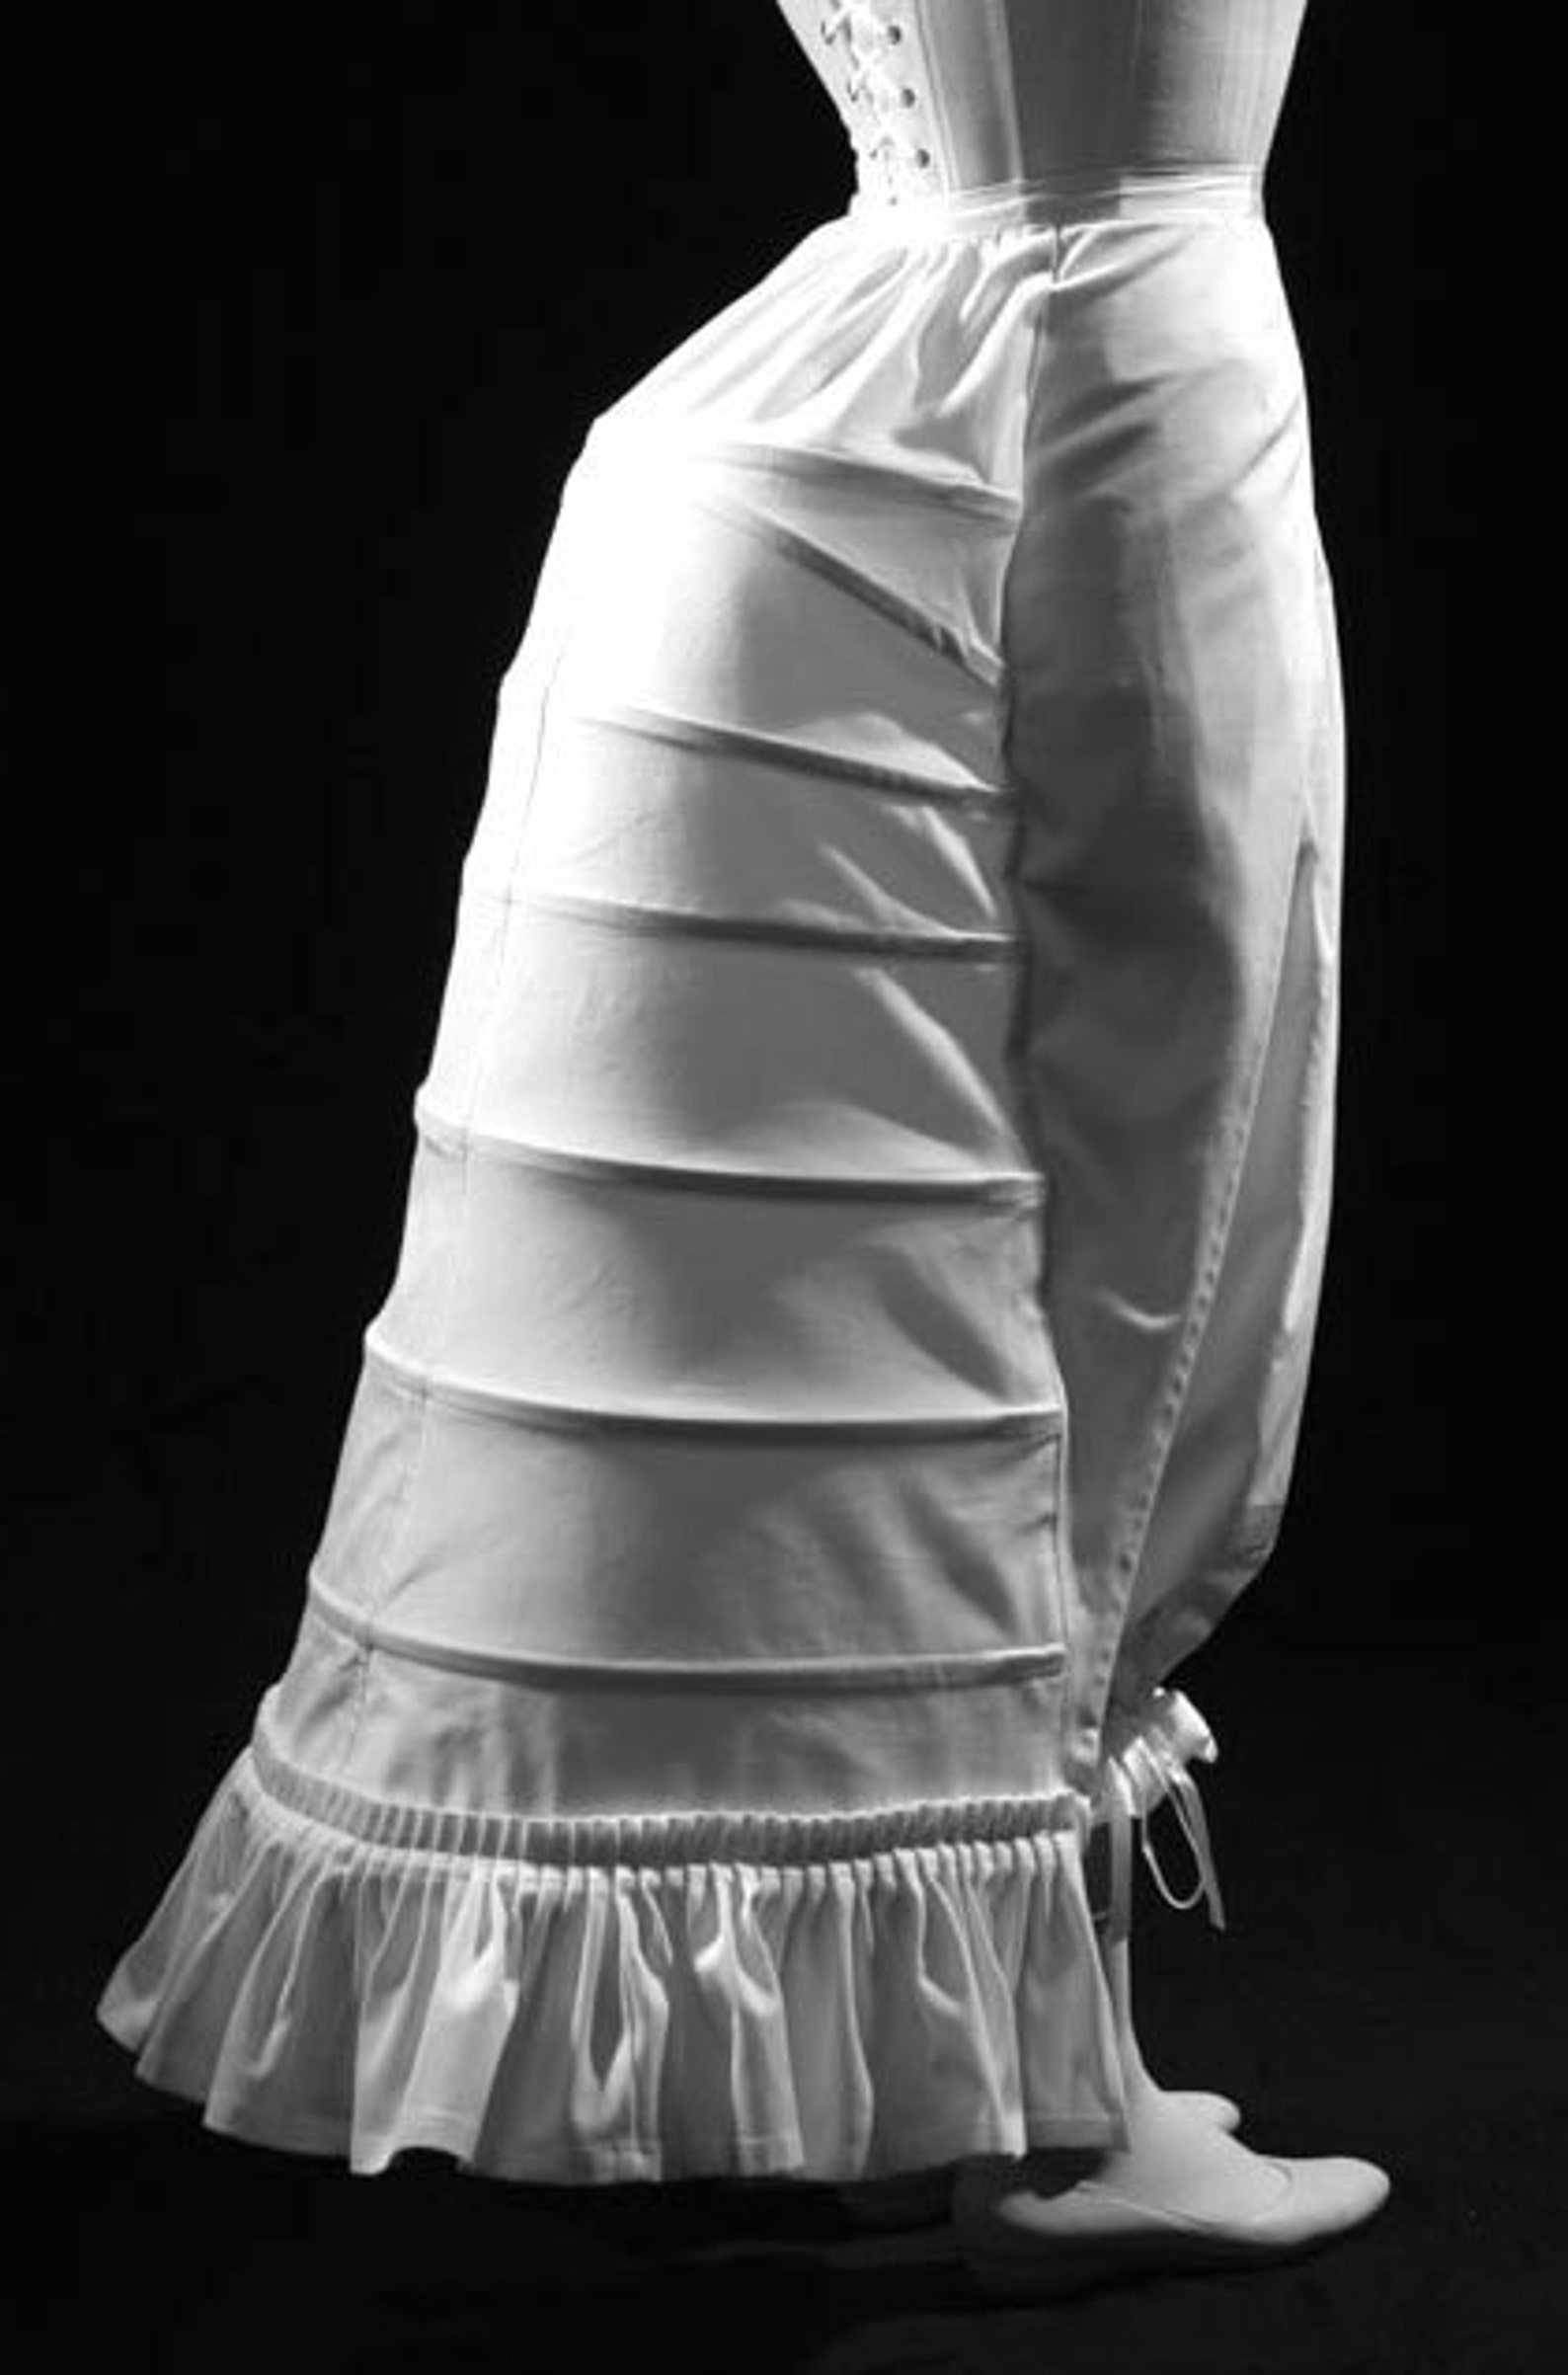 Victorian Bustle Petticoat late 19th century c. 1880 Historic | Etsy